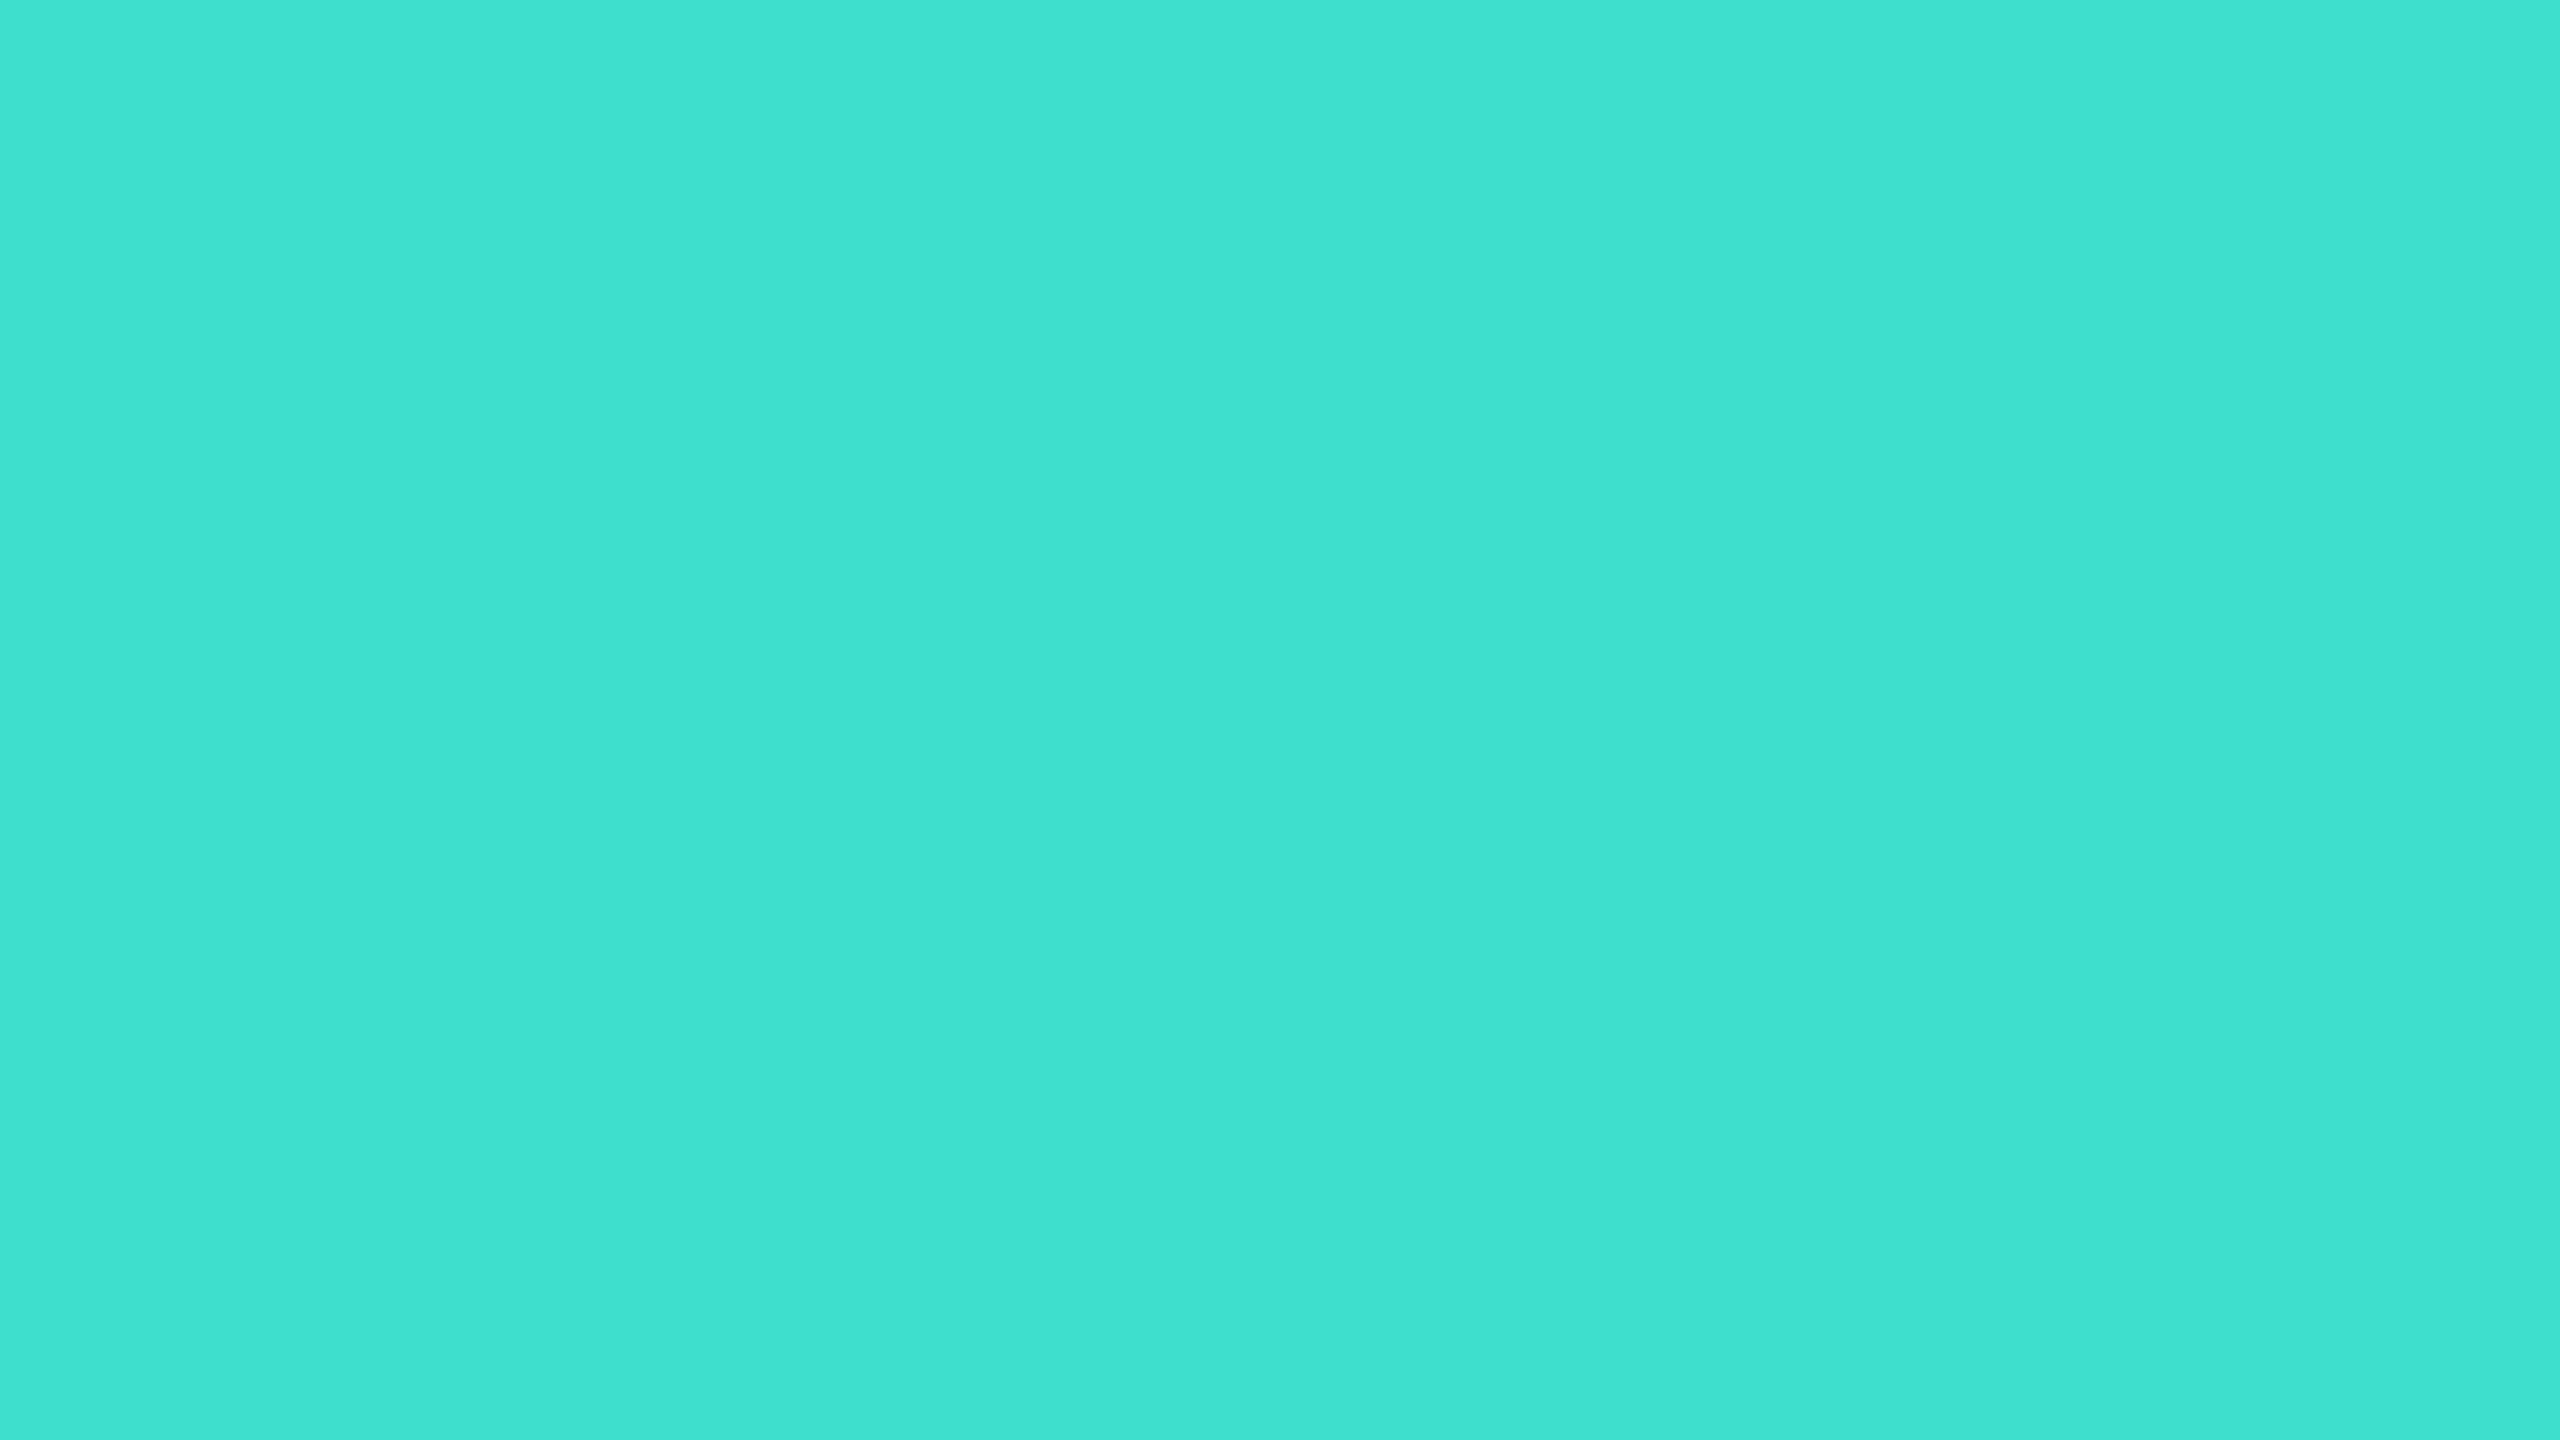 Turquoise Background Tumblr Turquoise desktop wallpaper 2560x1440